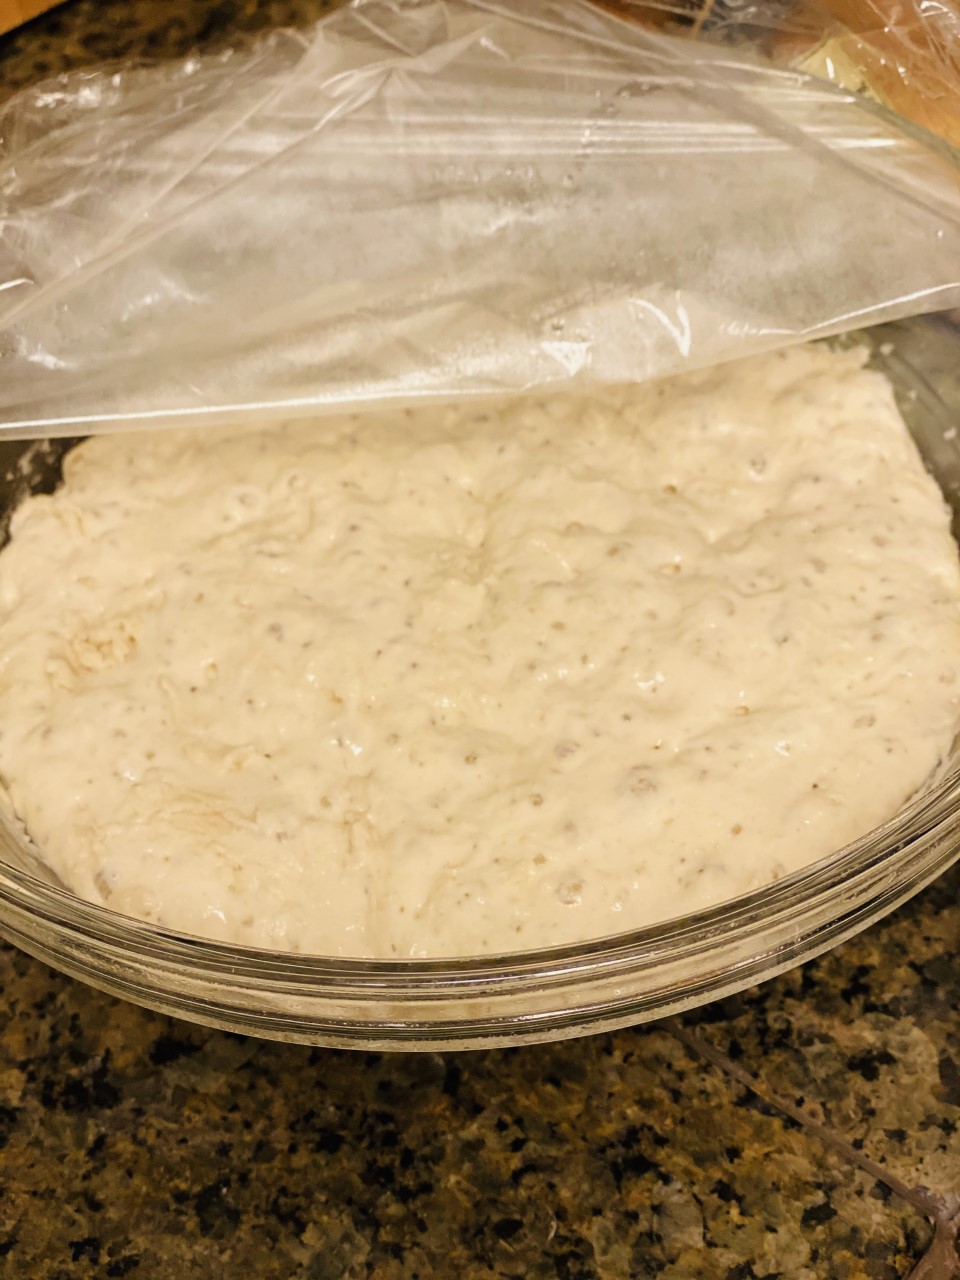 Ciabatta bread "sponge" bubbling up in a bowl.